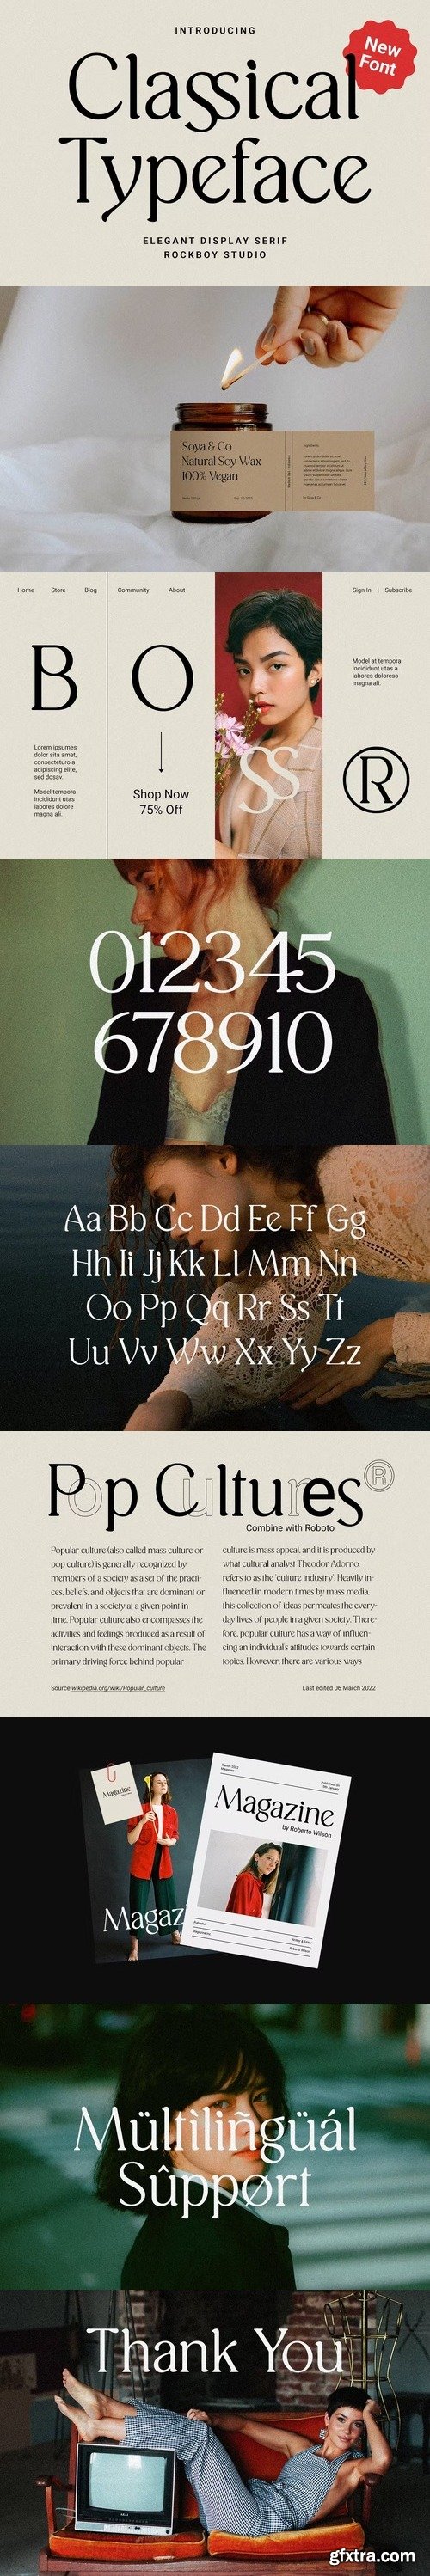 Classical typeface